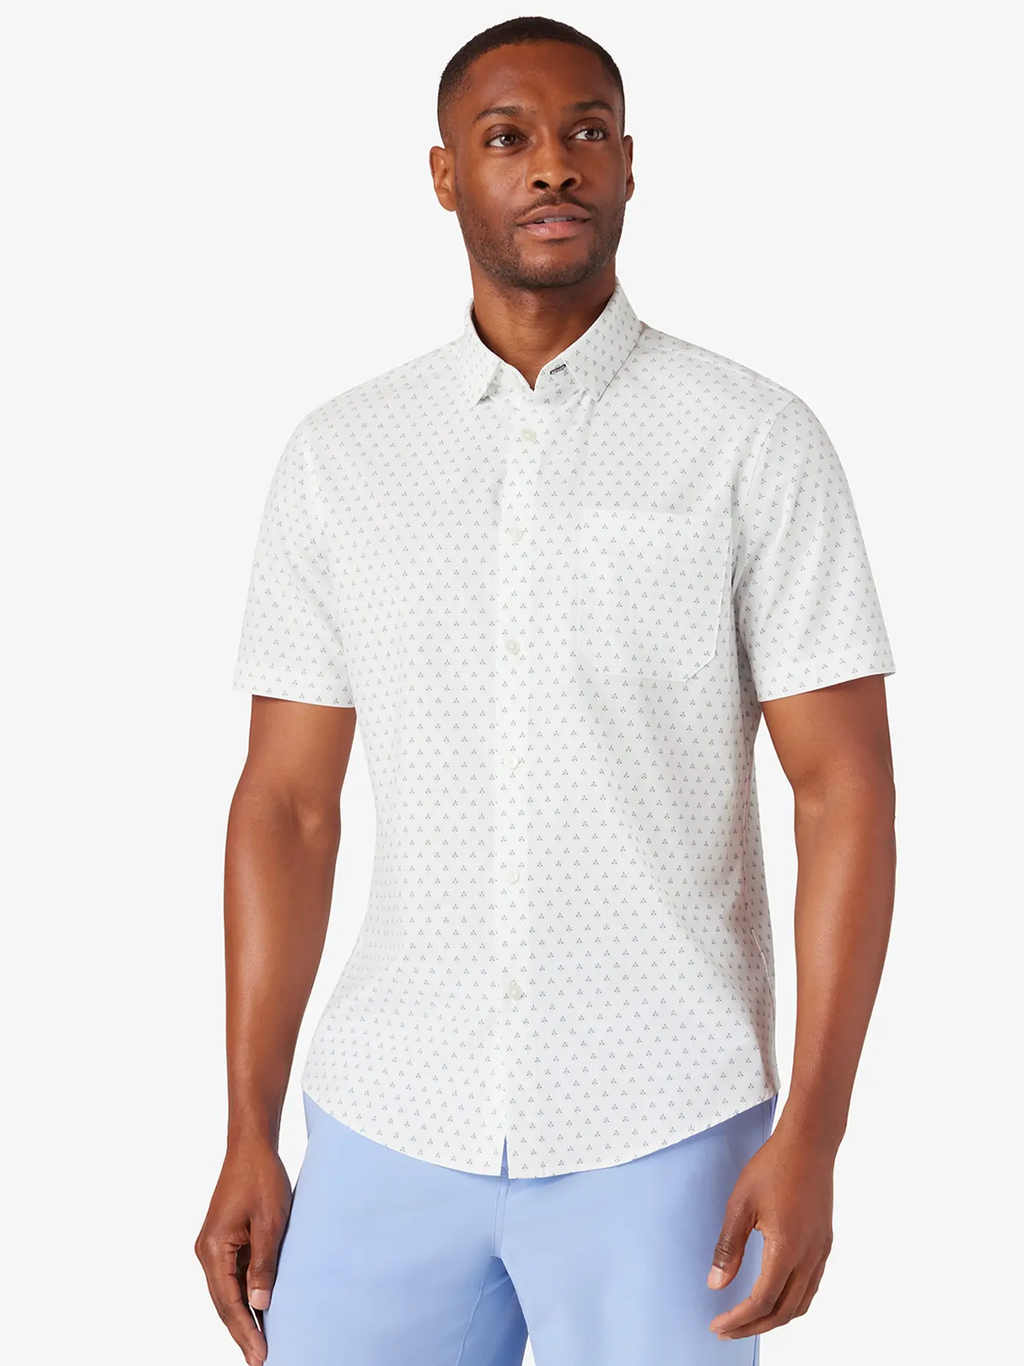 Leeward Short Sleeve Shirt in Balsam Star